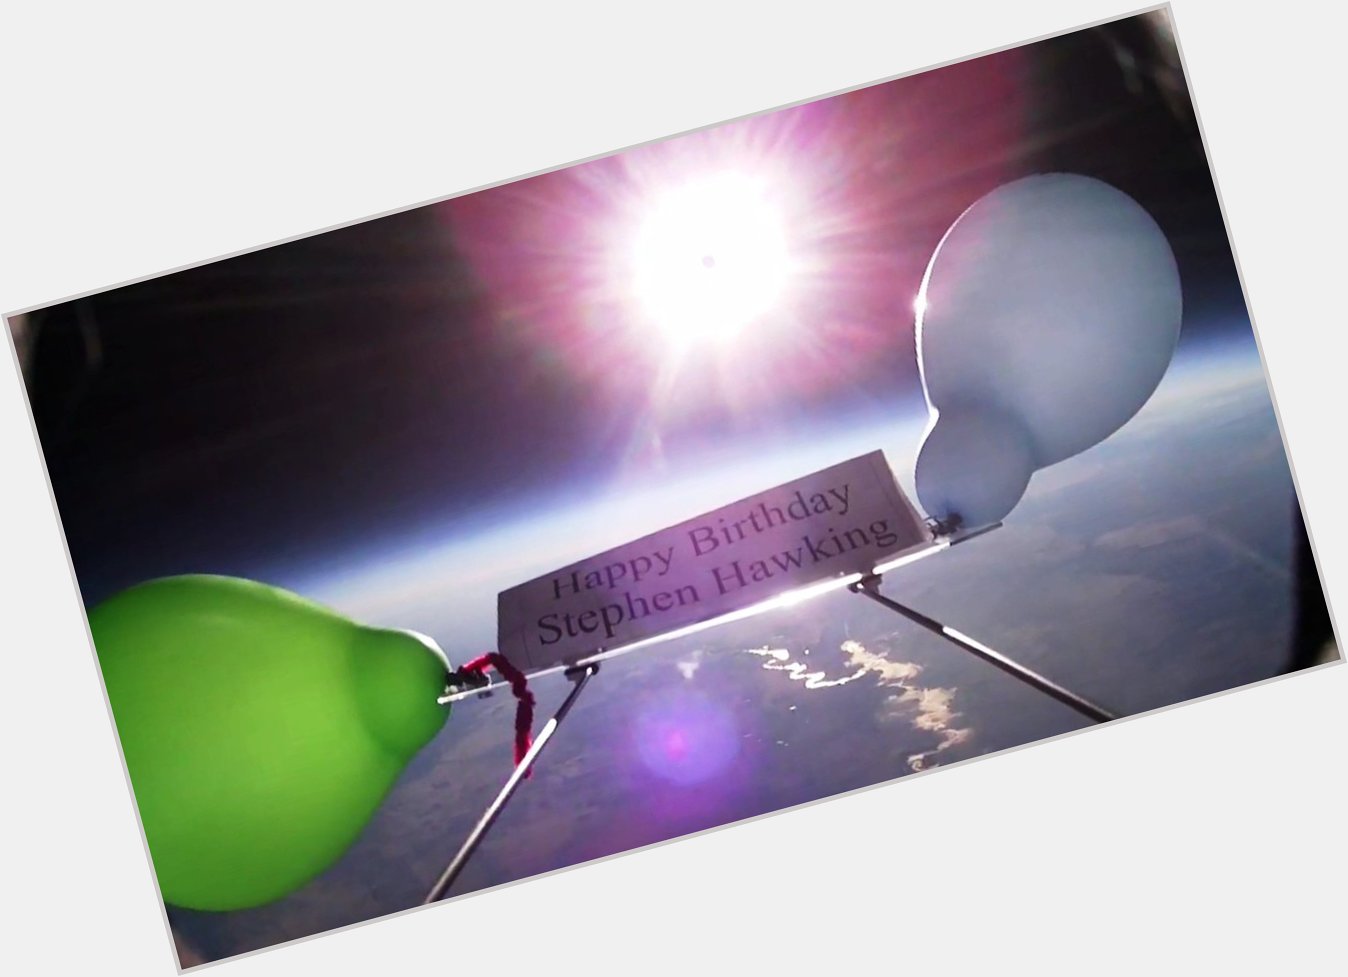 Happy 75th birthday, Stephen Hawking! Here s a stratospheric balloon tribute  